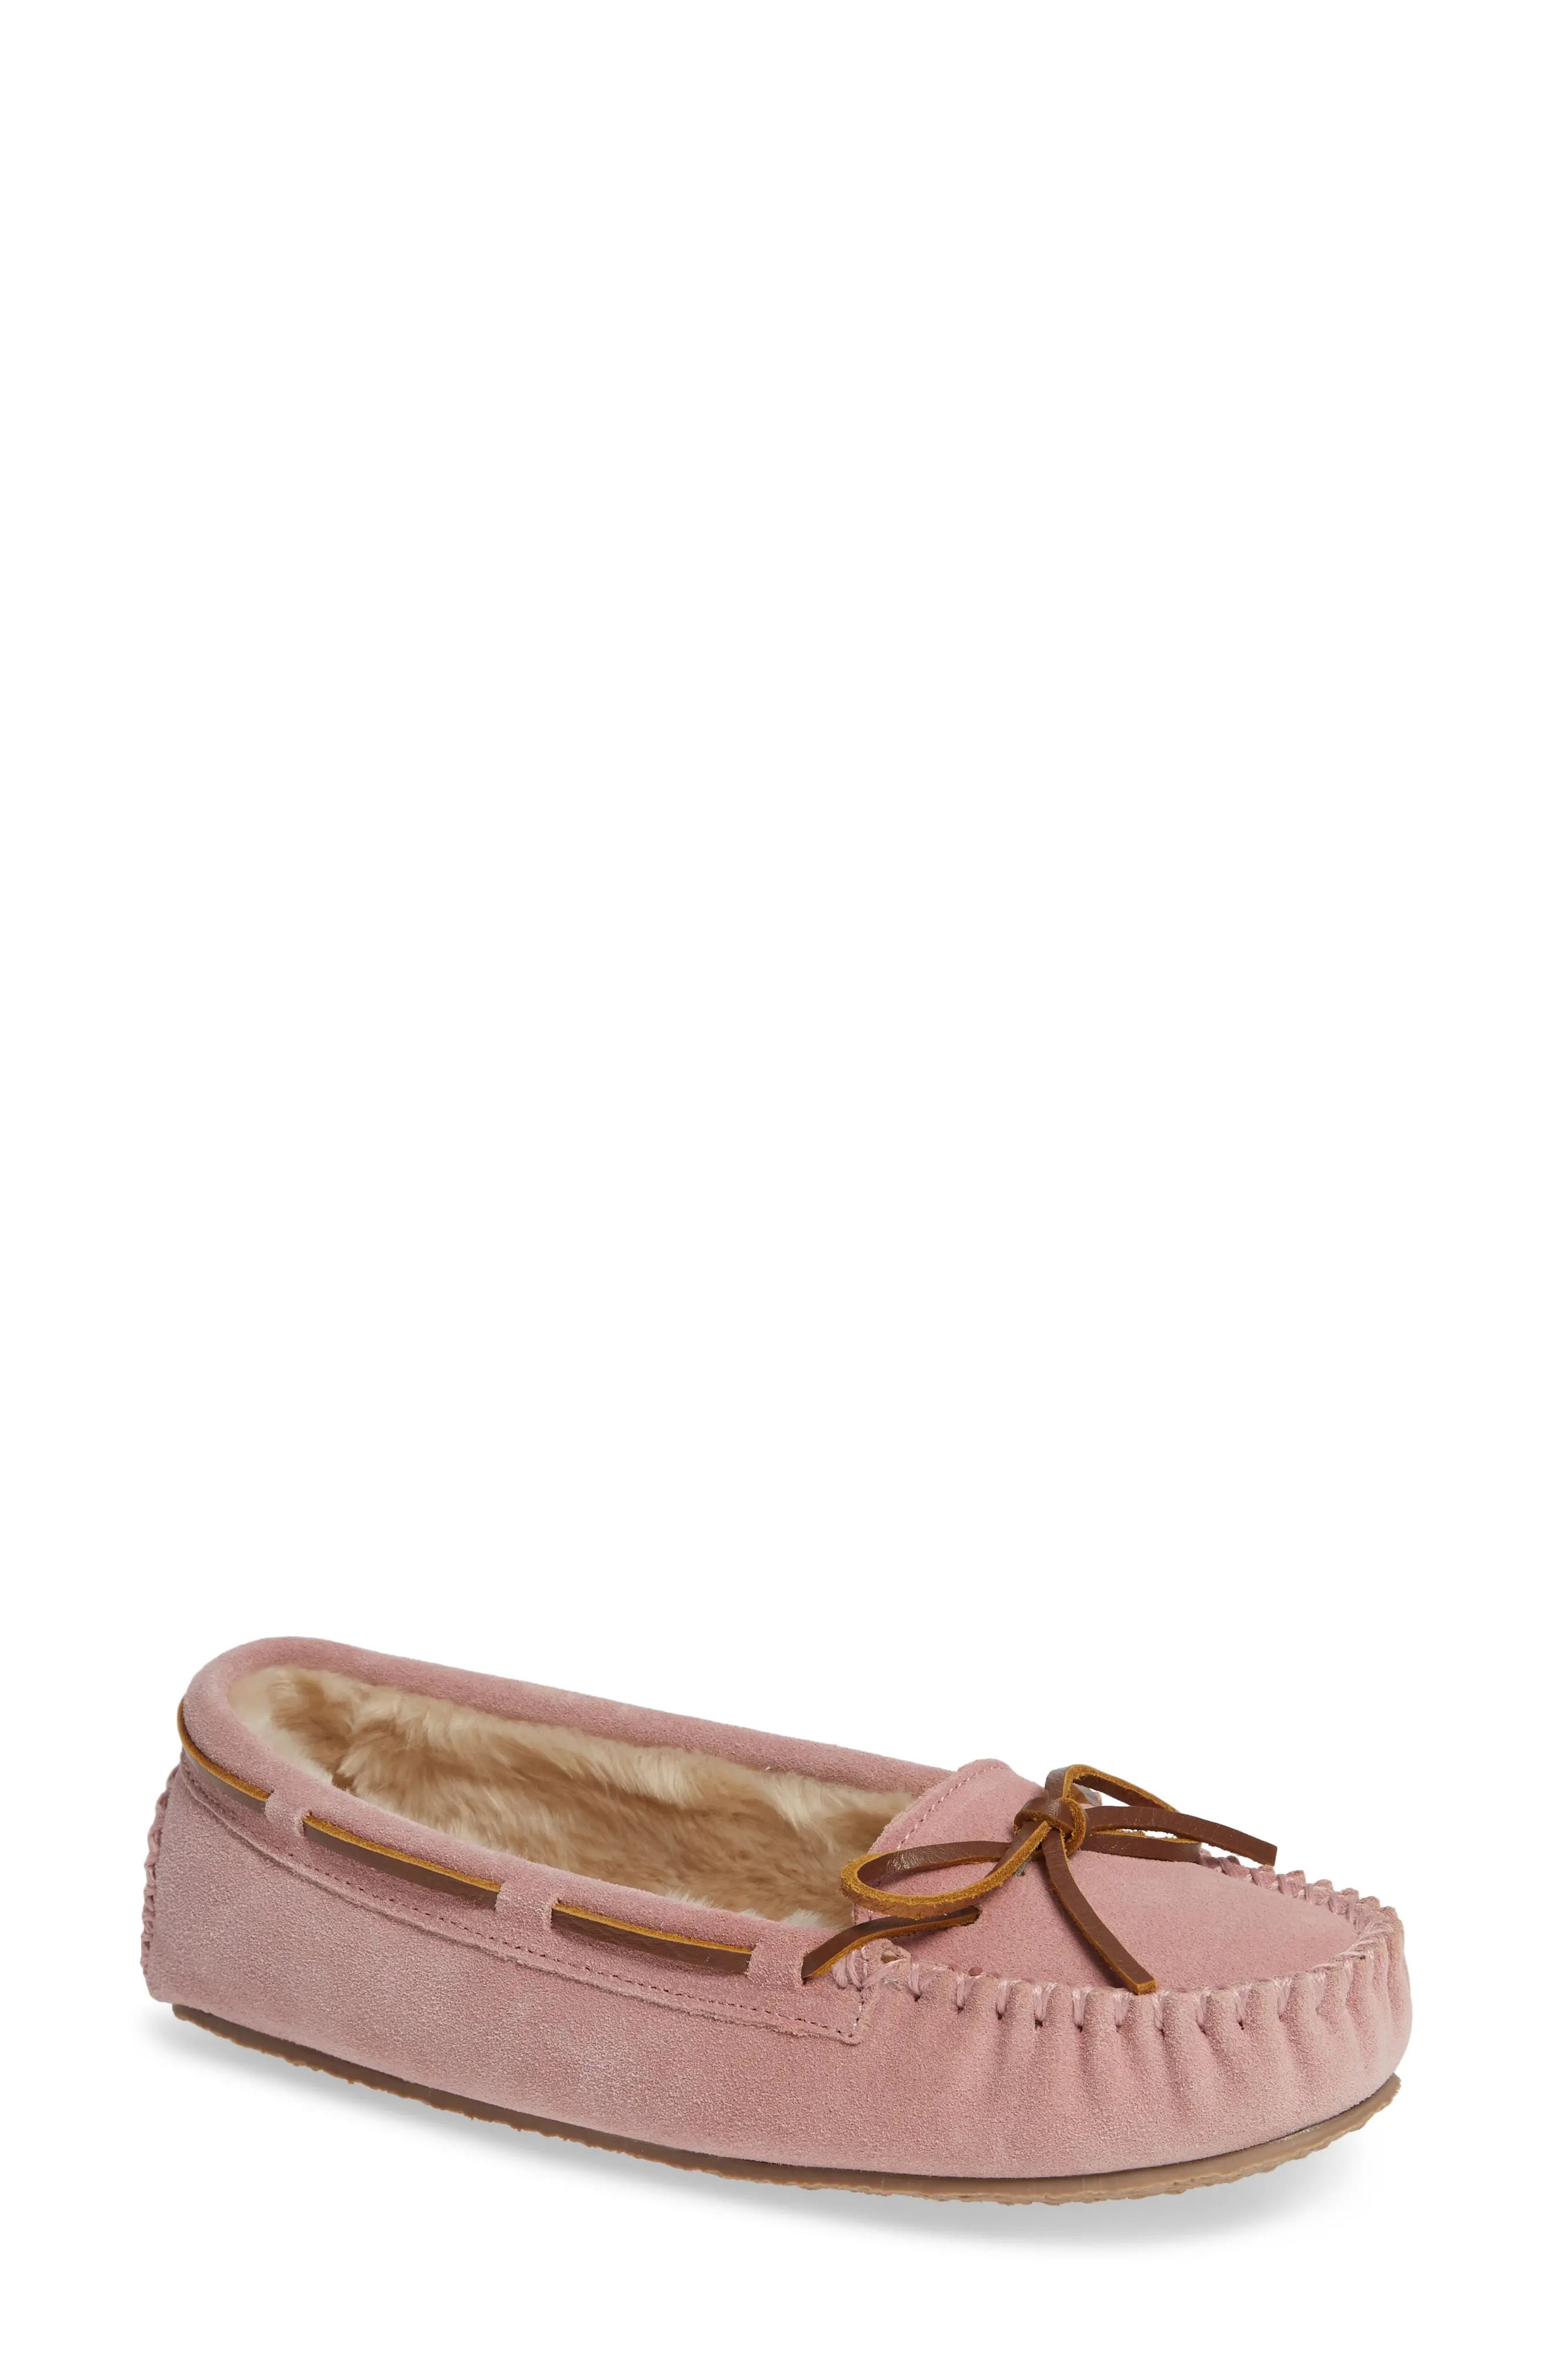 Women's Minnetonka 'Cally' Slipper, Size 5 M - Pink | Nordstrom